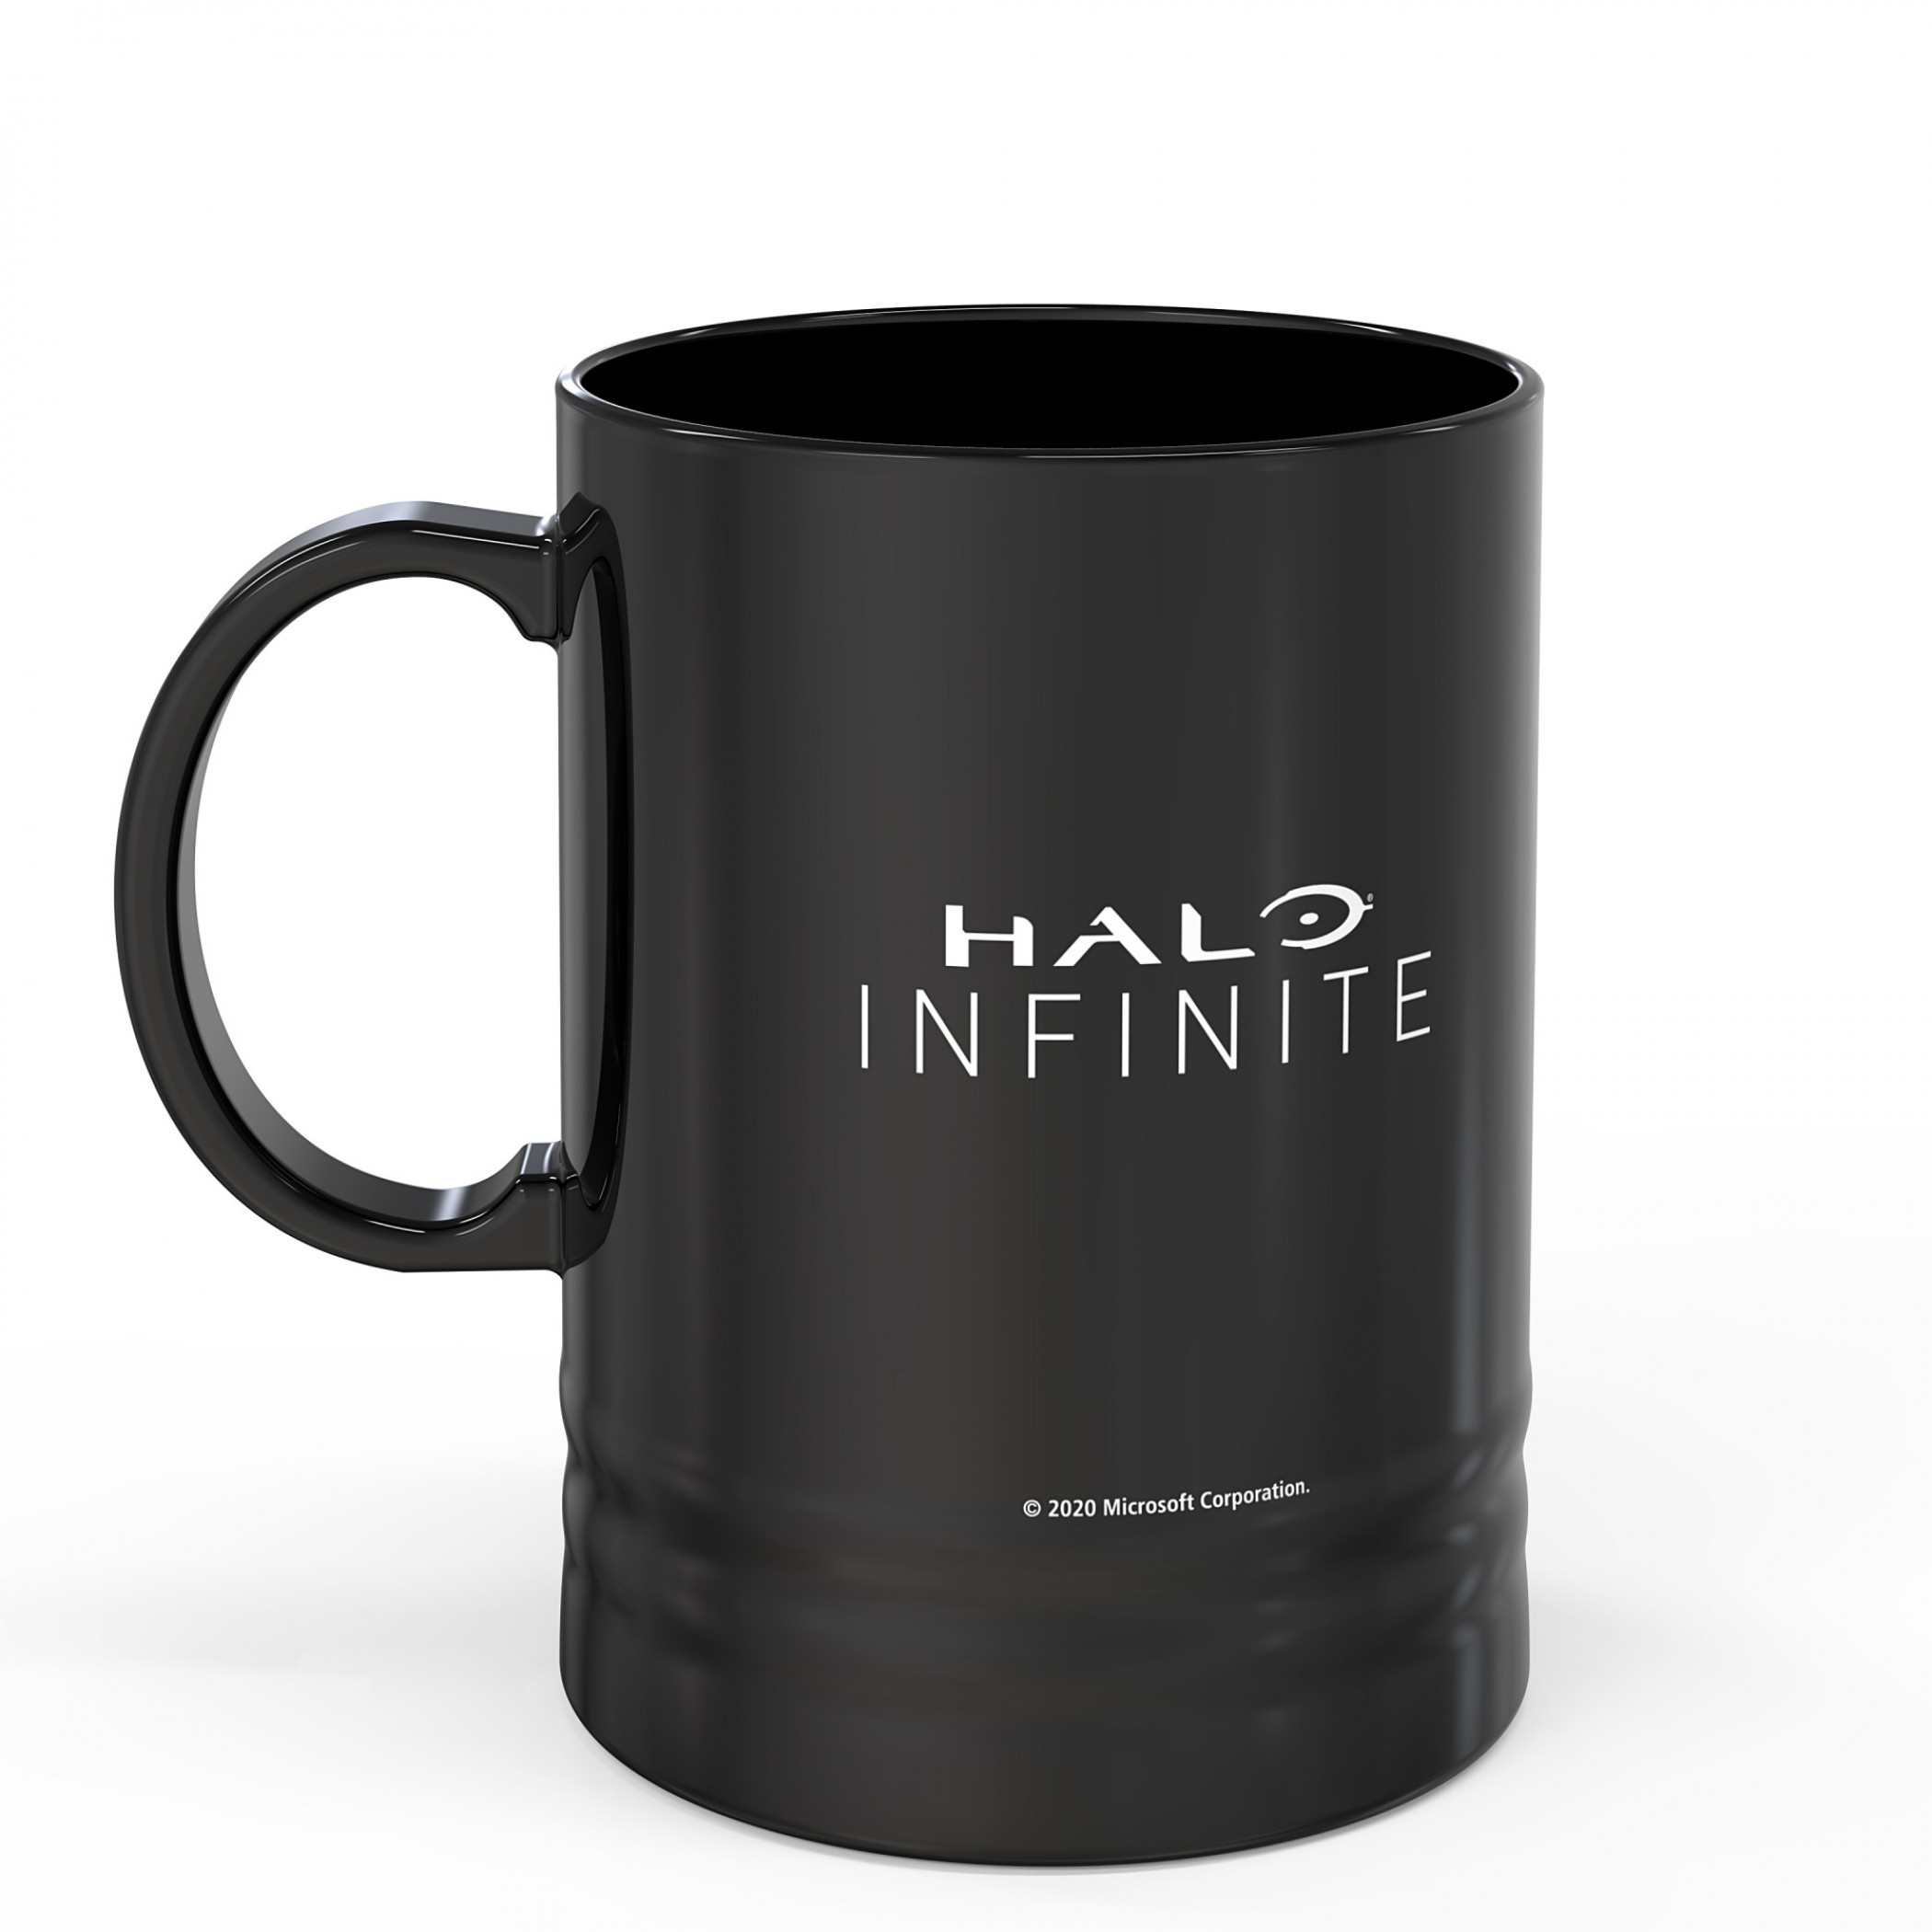 Halo UNSC Crest Tall Ceramic Mug